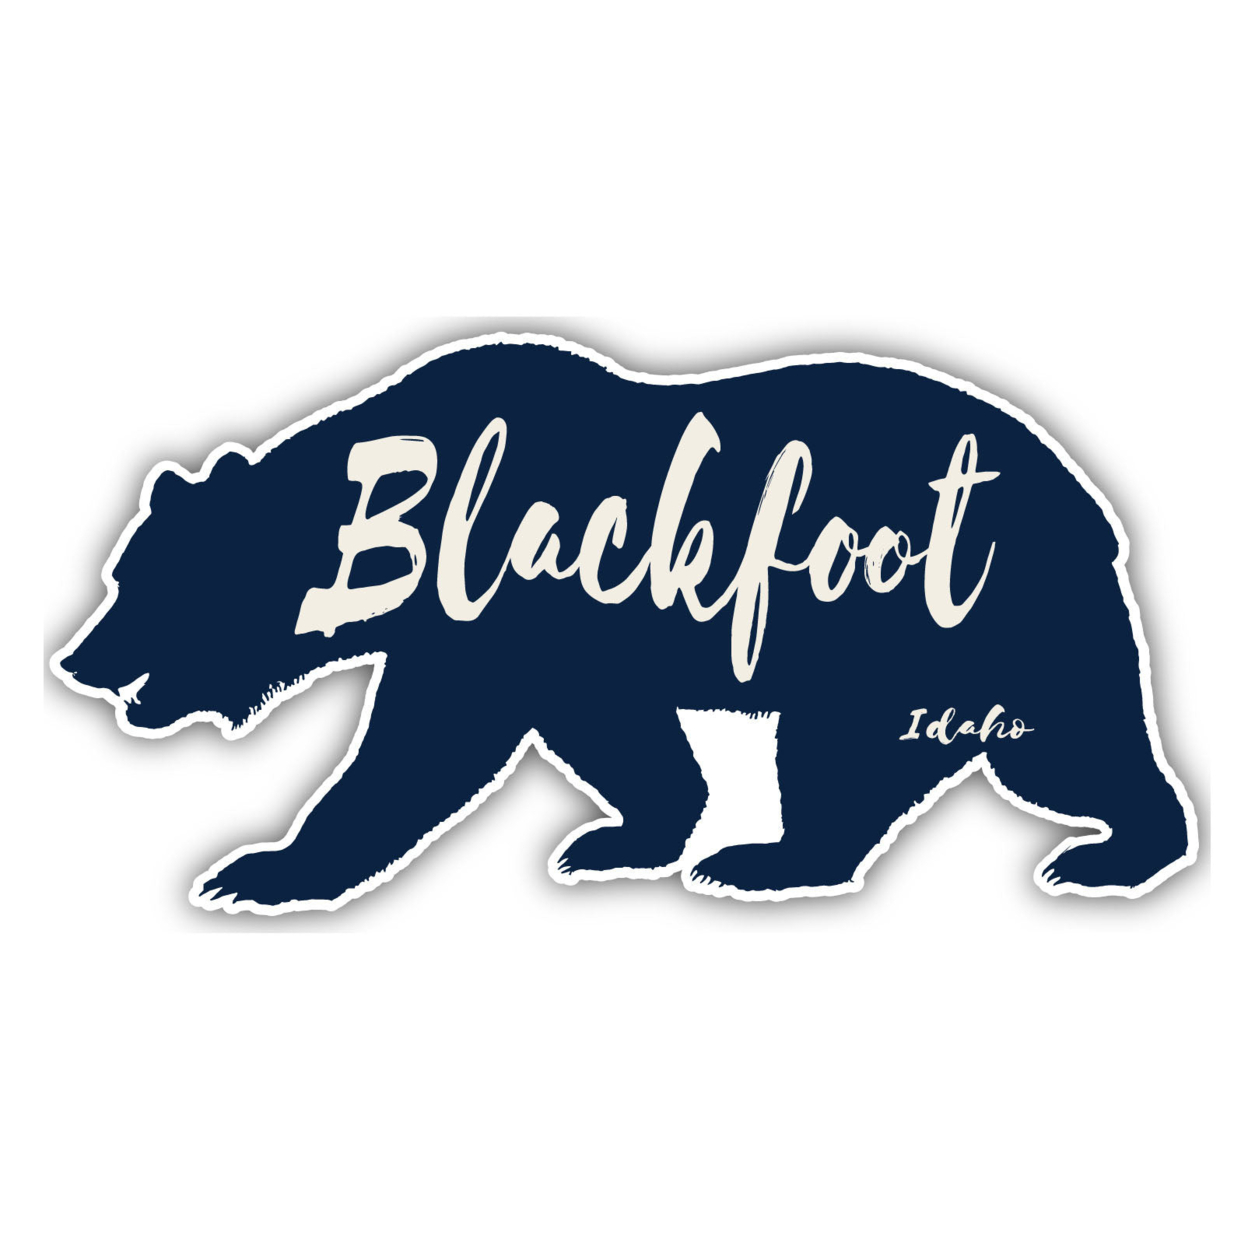 Blackfoot Idaho Souvenir Decorative Stickers (Choose Theme And Size) - Single Unit, 4-Inch, Tent